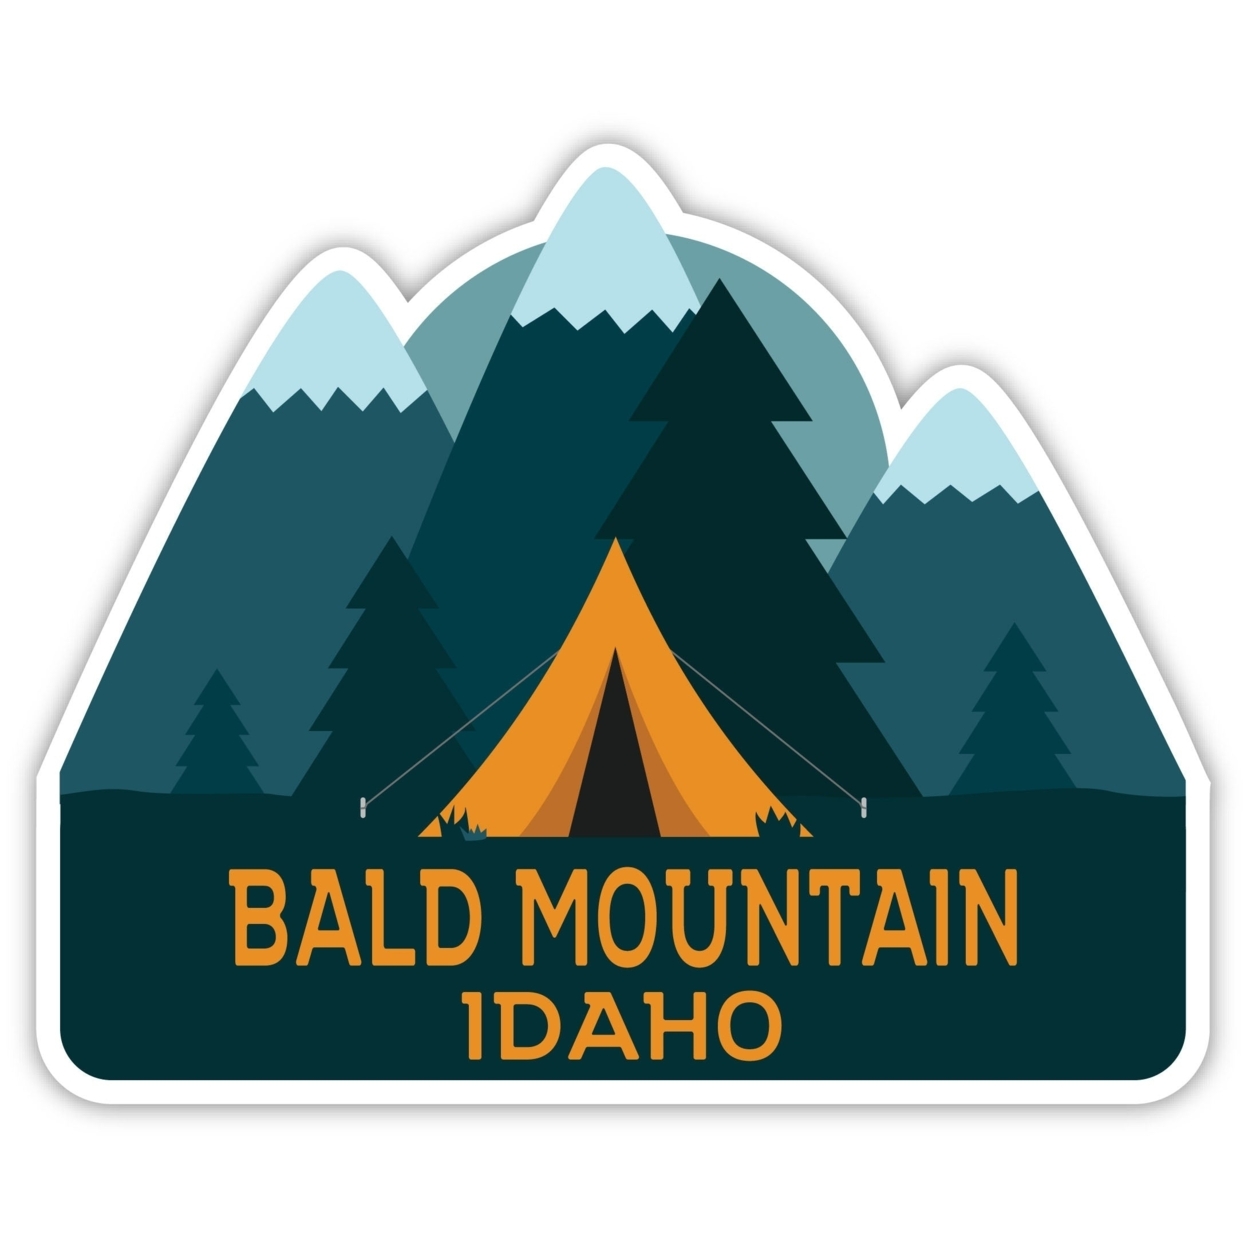 Bald Mountain Idaho Souvenir Decorative Stickers (Choose Theme And Size) - Single Unit, 8-Inch, Tent